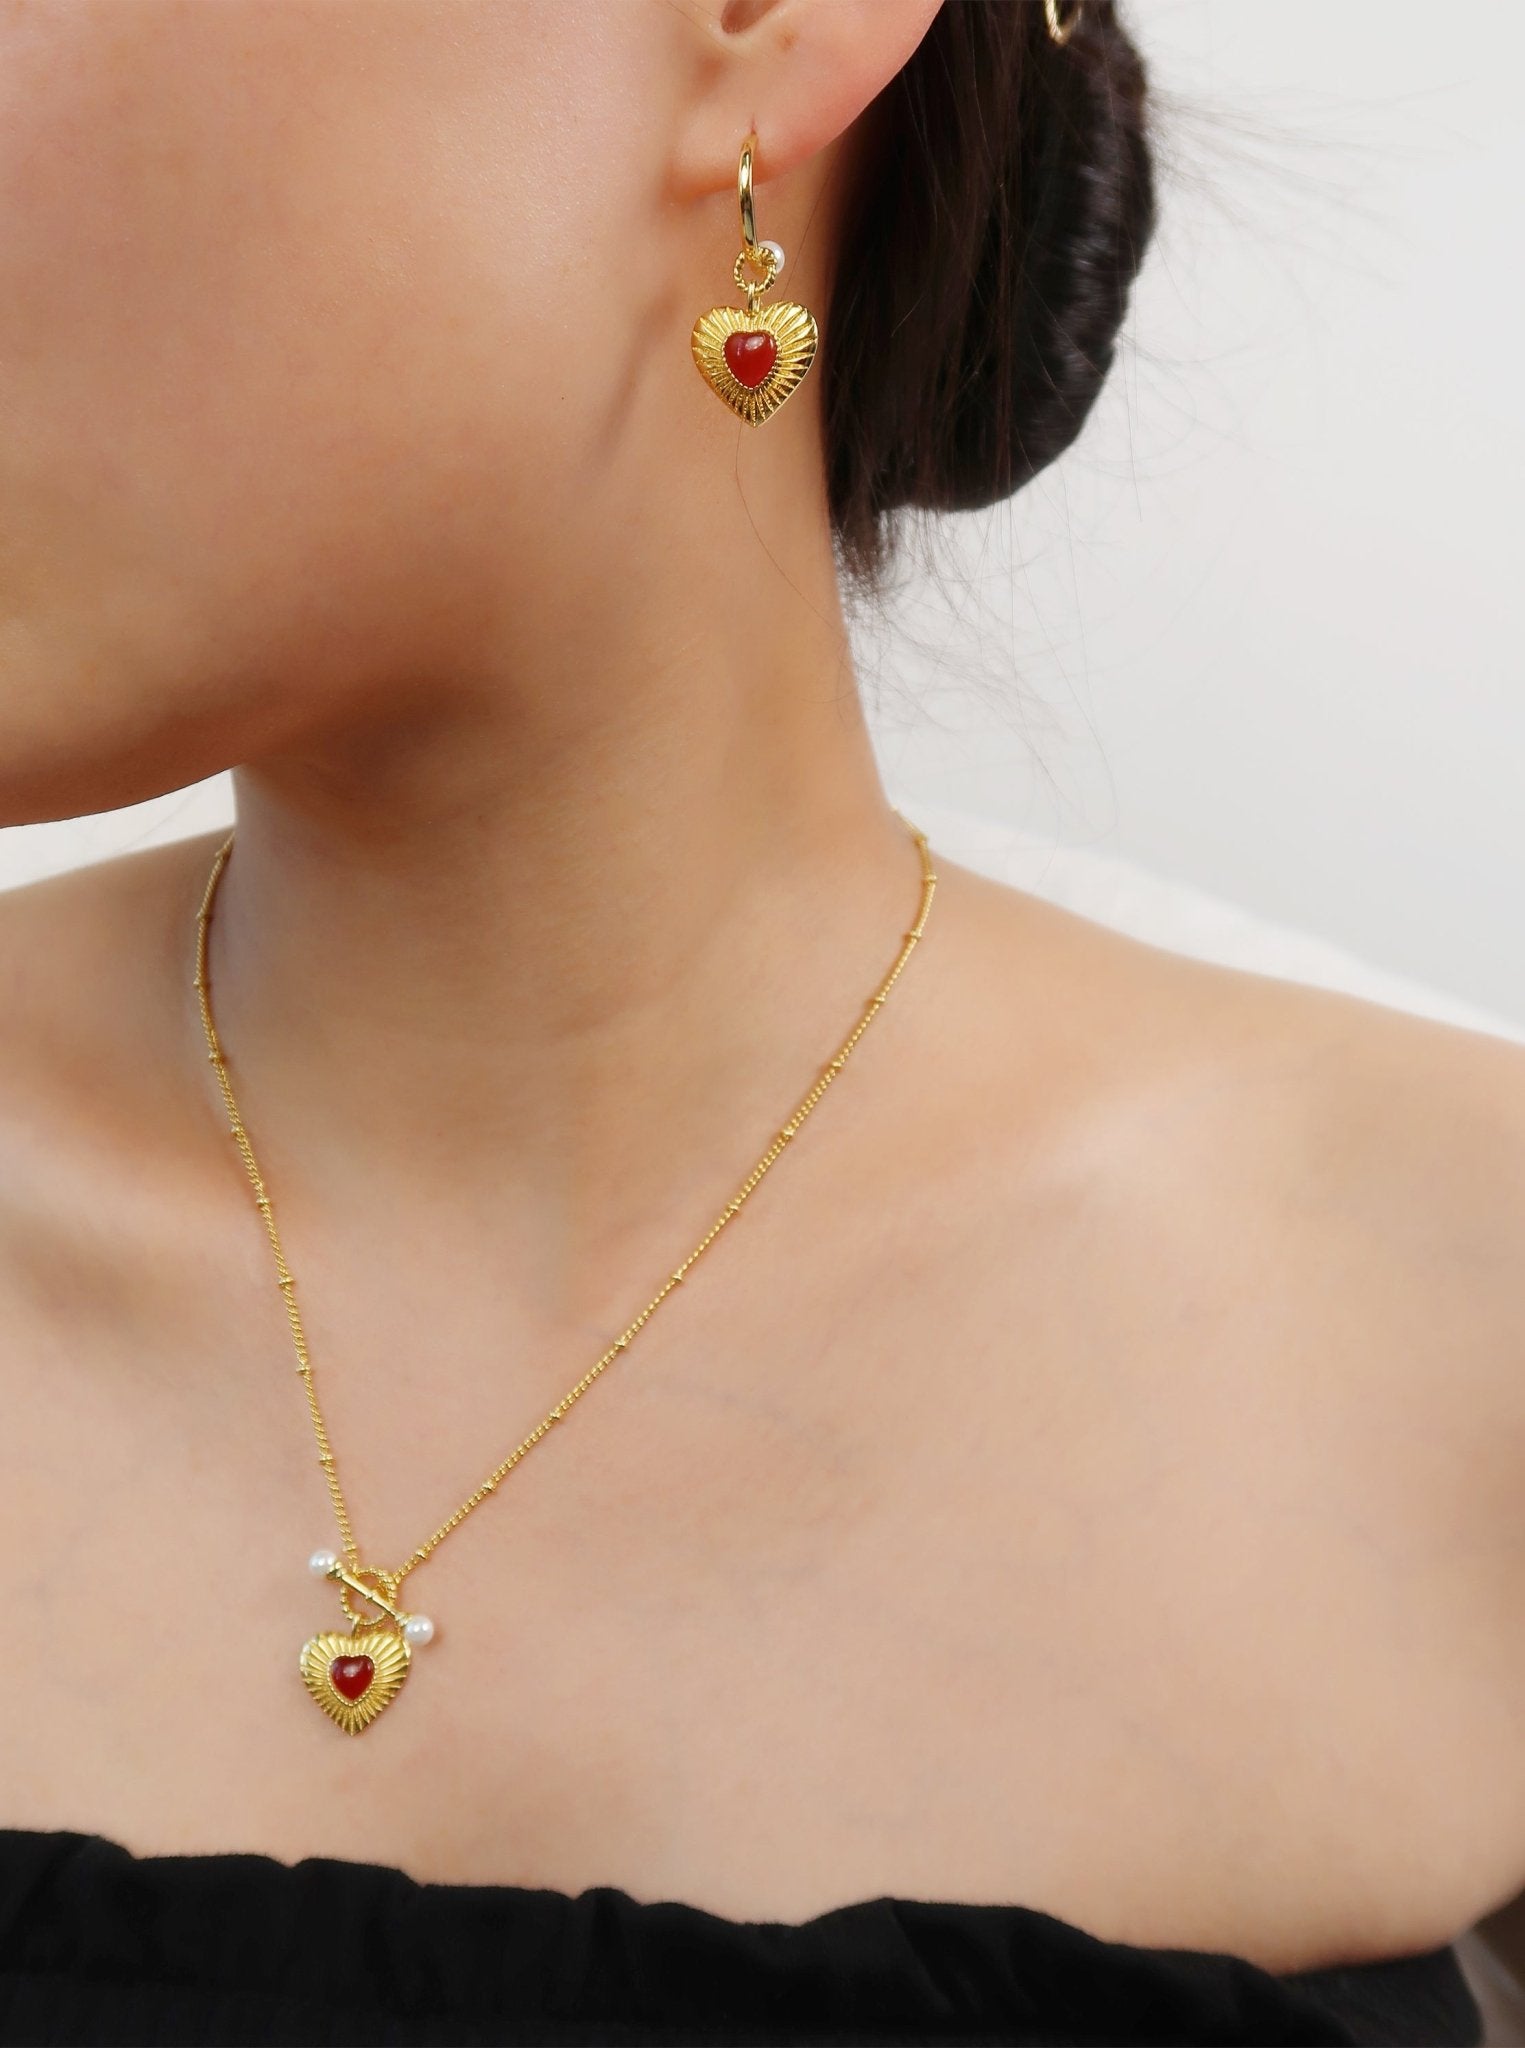 Helena Carnelian Heart Necklace